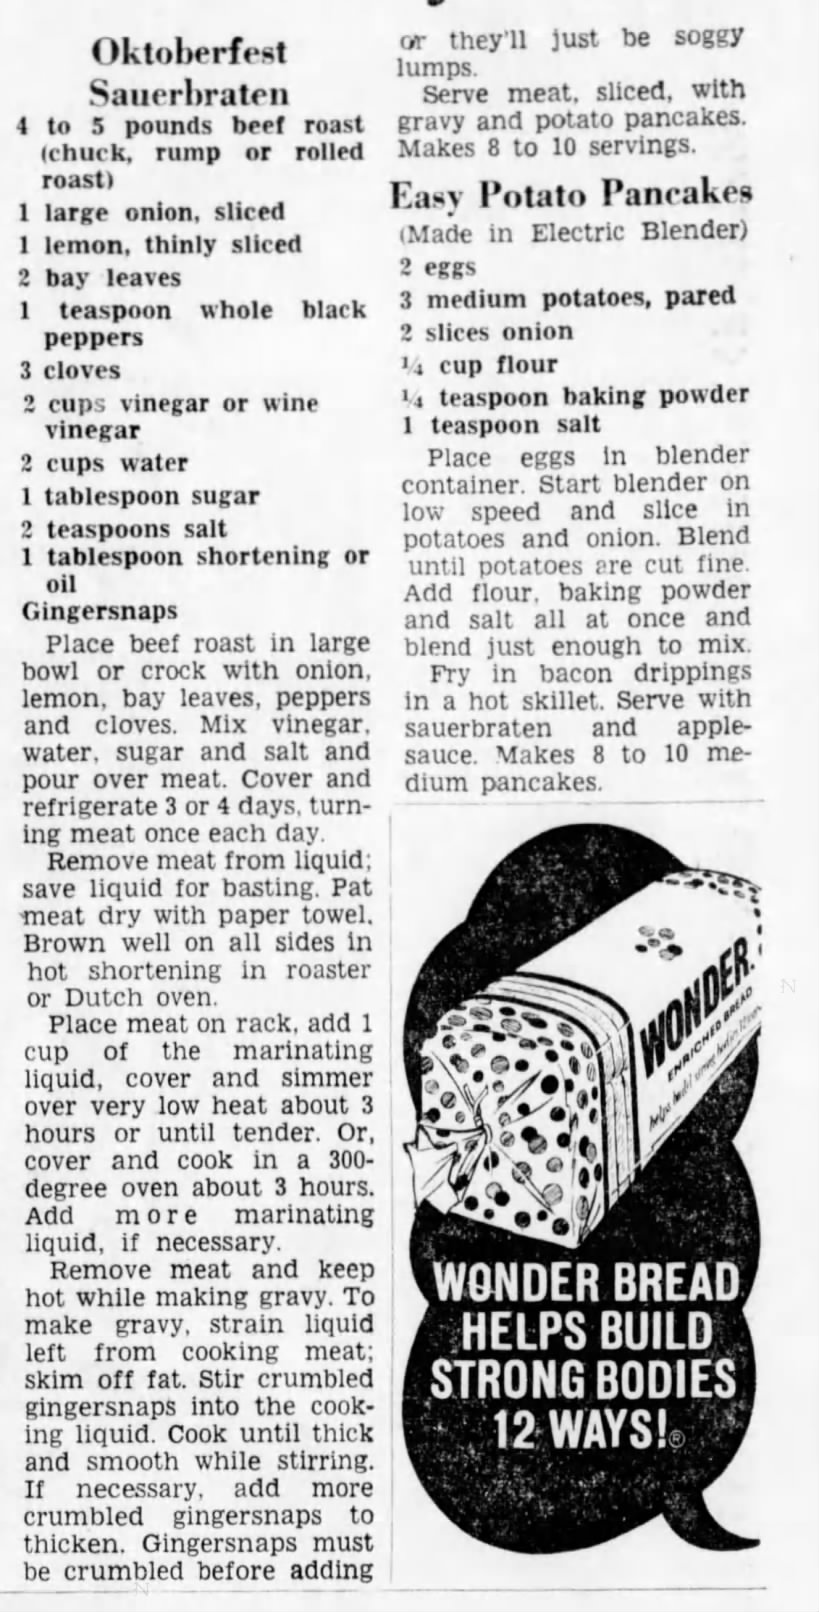 Cincinnati Enquirer, 8 November, 1967